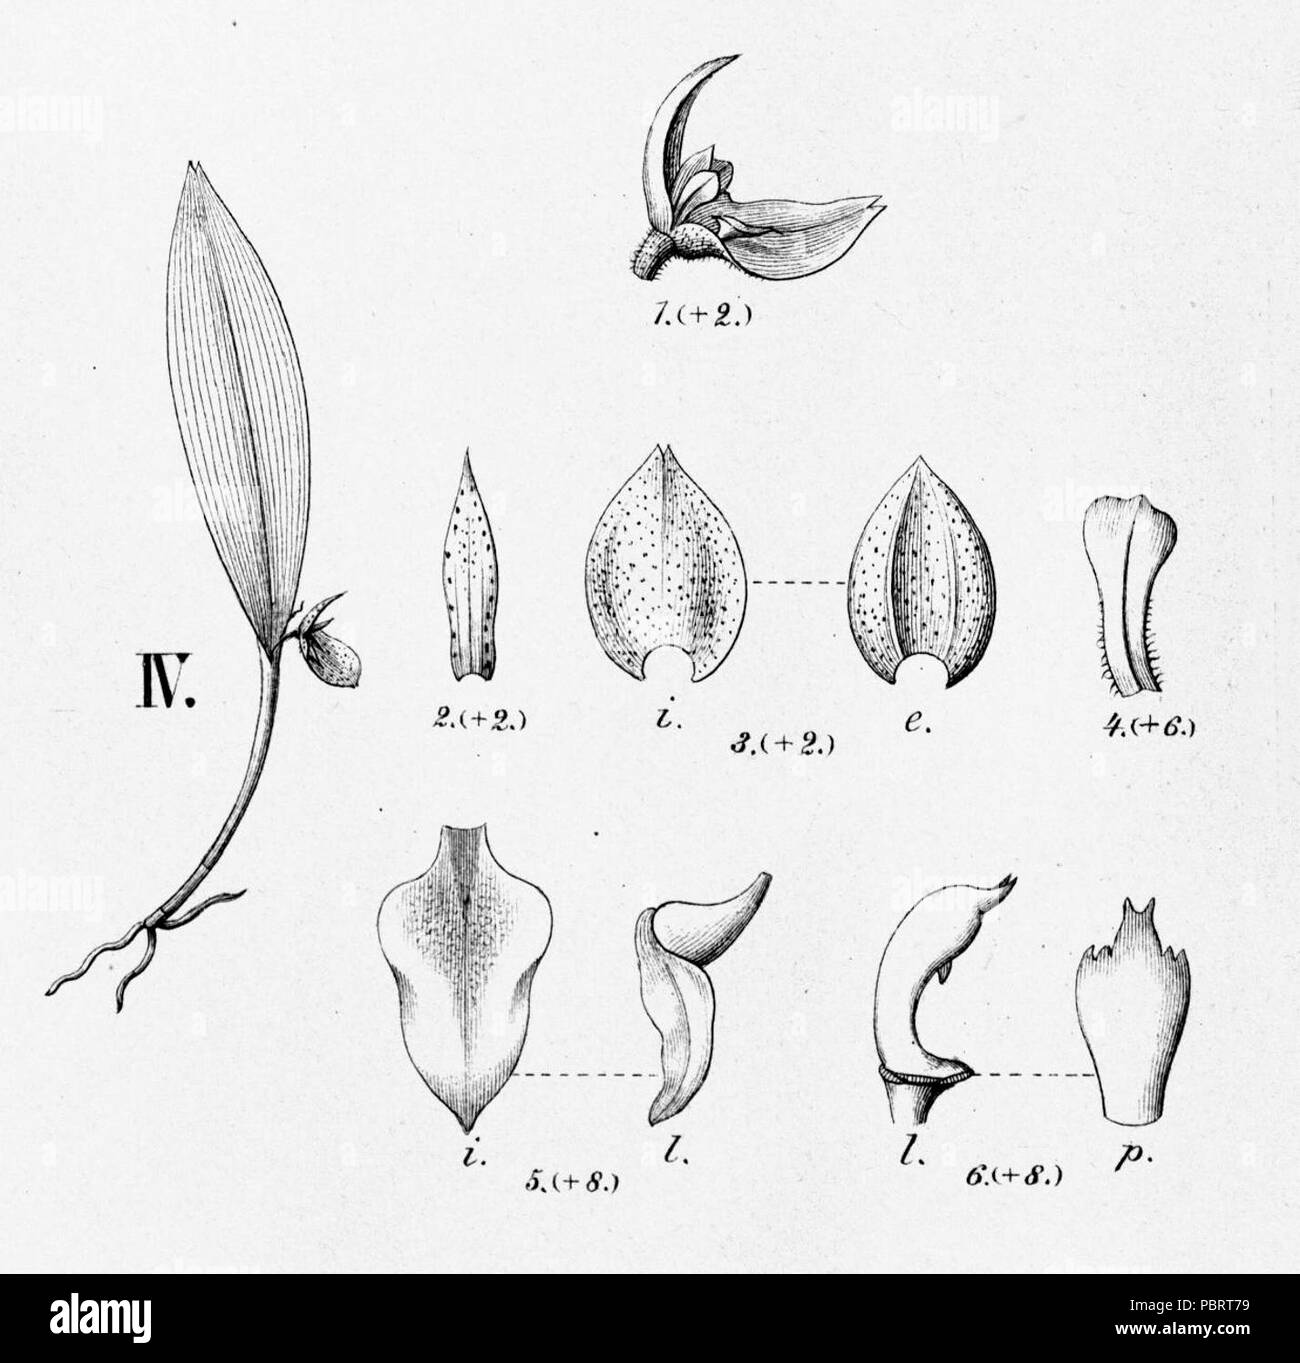 Acianthera bicornuta (as syn. Pleurothallis bicornuta) - cutout from Fl.Br.3-4-97 - fig. IV. Stock Photo